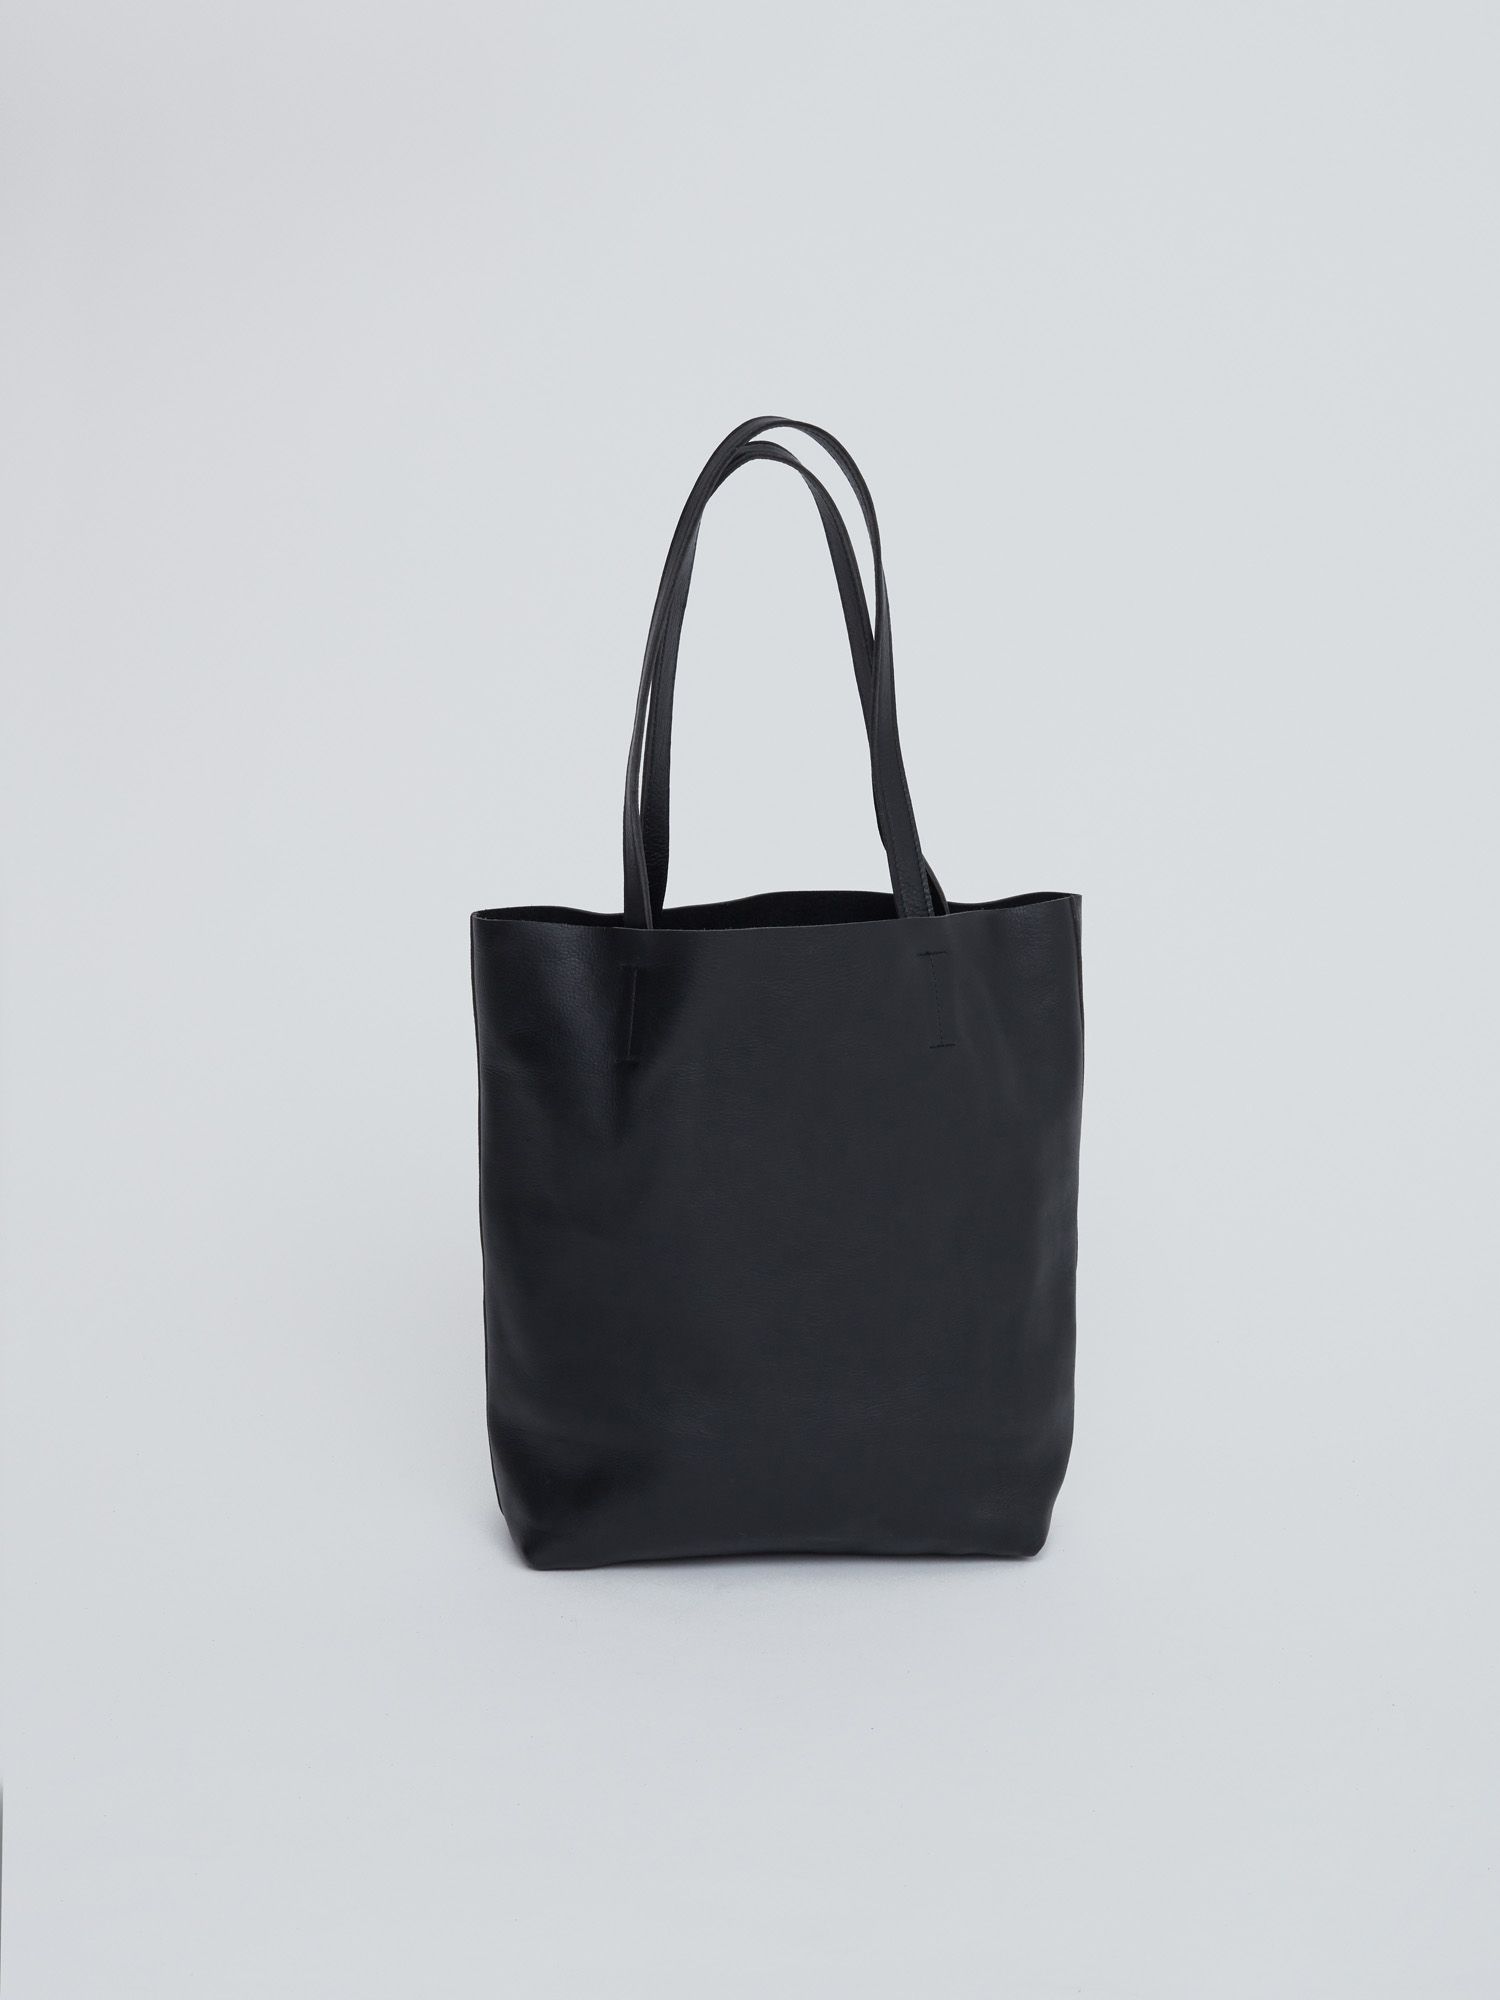 Parley Ocean Bag – shop.parley.com